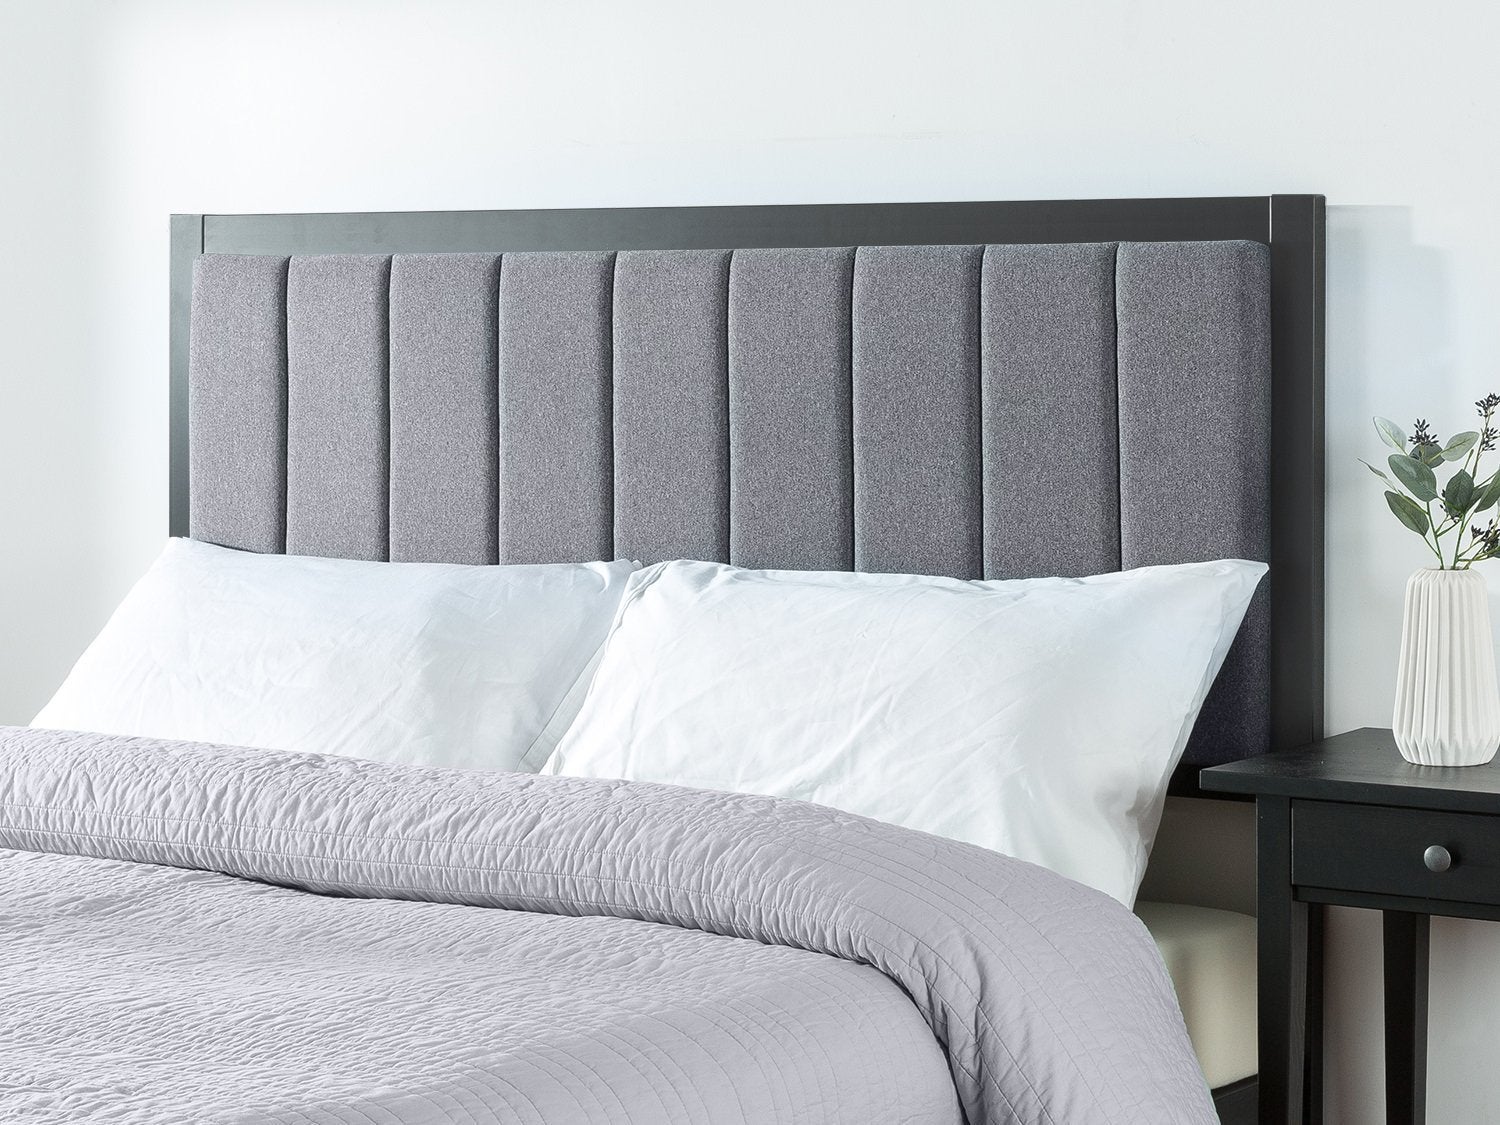 Zinus Anuar Fabric Headboard Banded Grey Upholstered Metal Hd Foam Bed Head Metal Frame Double